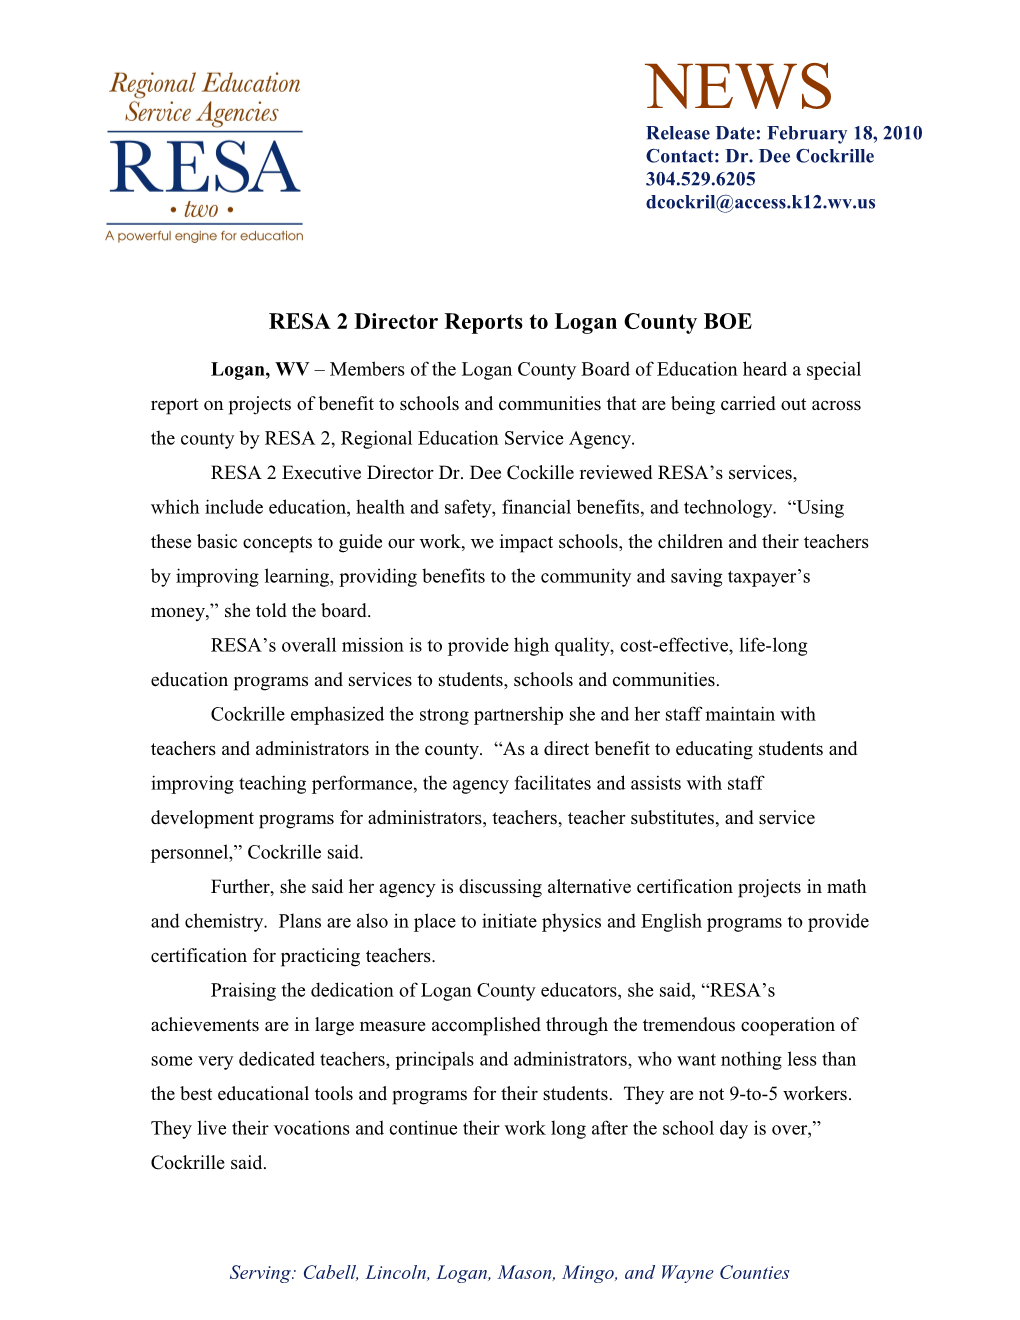 RESA 2 Director Reports to Logan County BOE